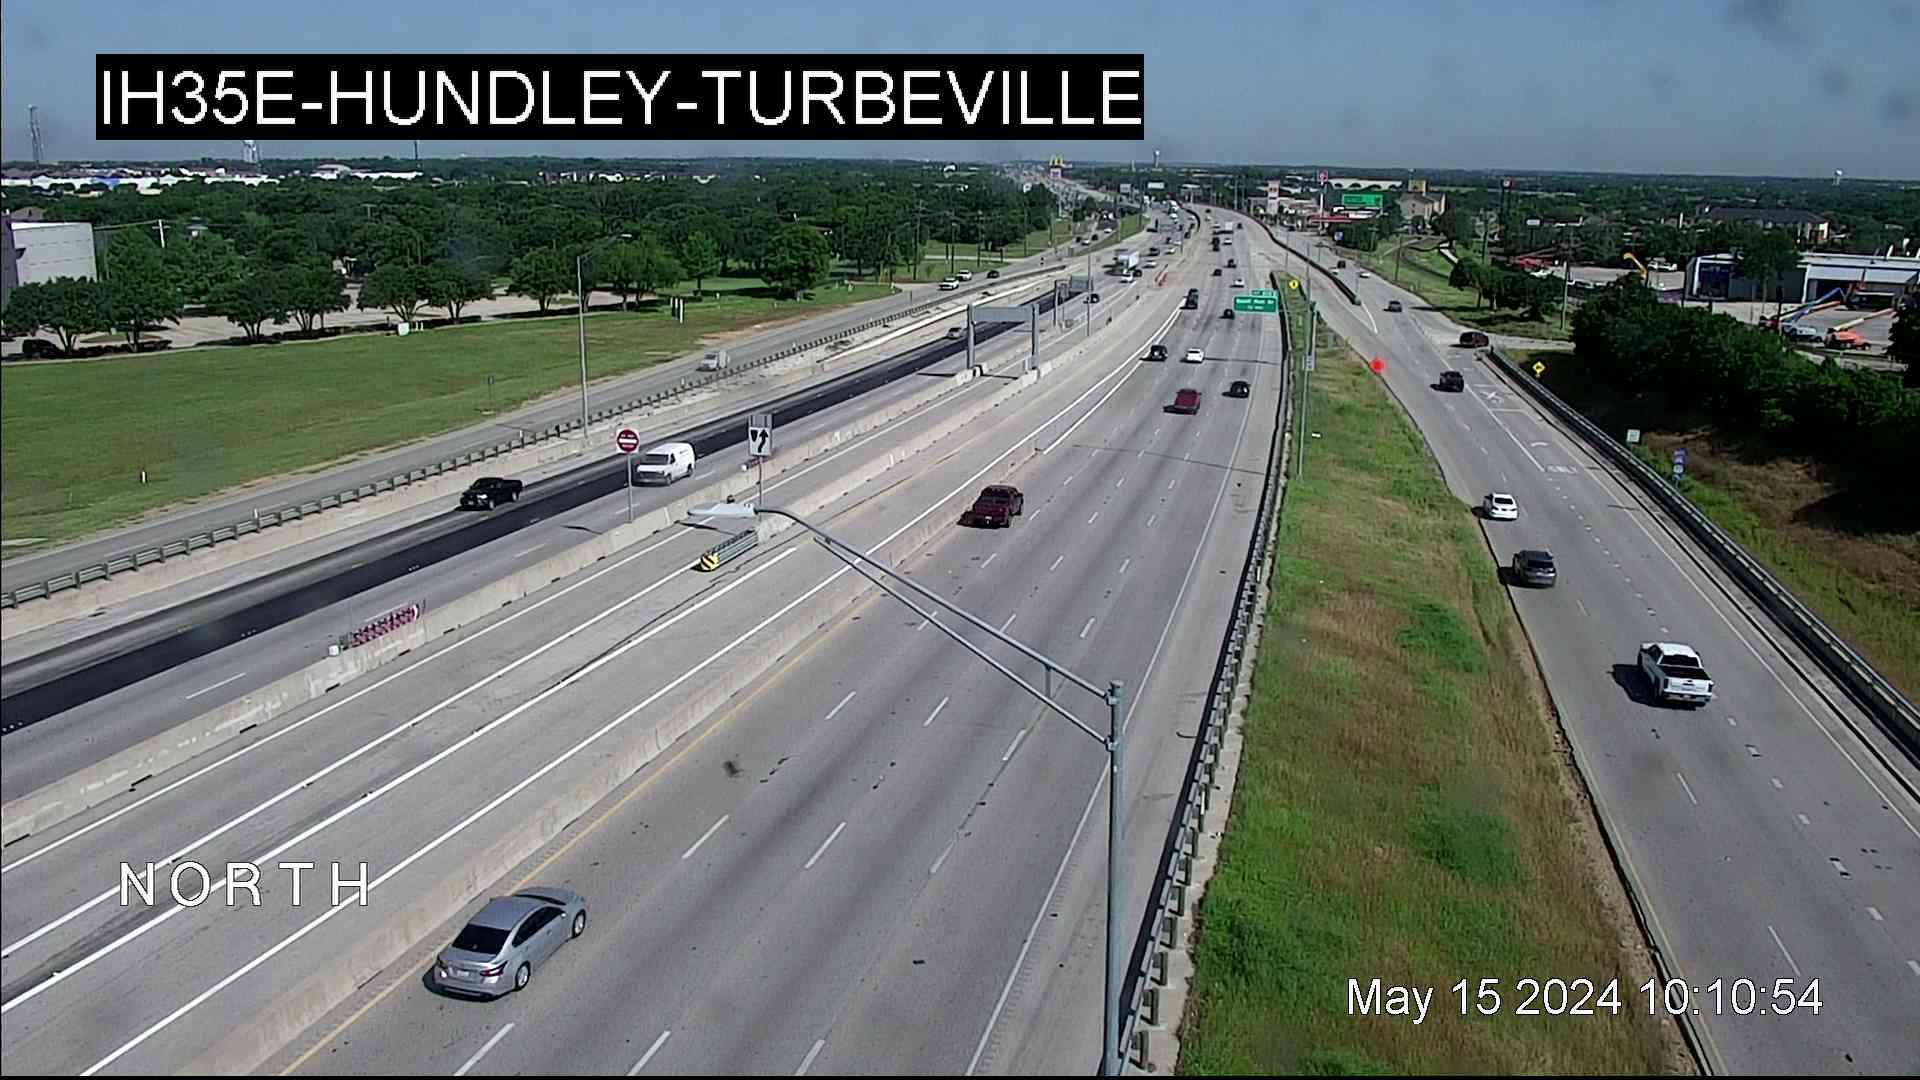 Lake Dallas › North: I-35E @ Hundley-Turbeville Traffic Camera